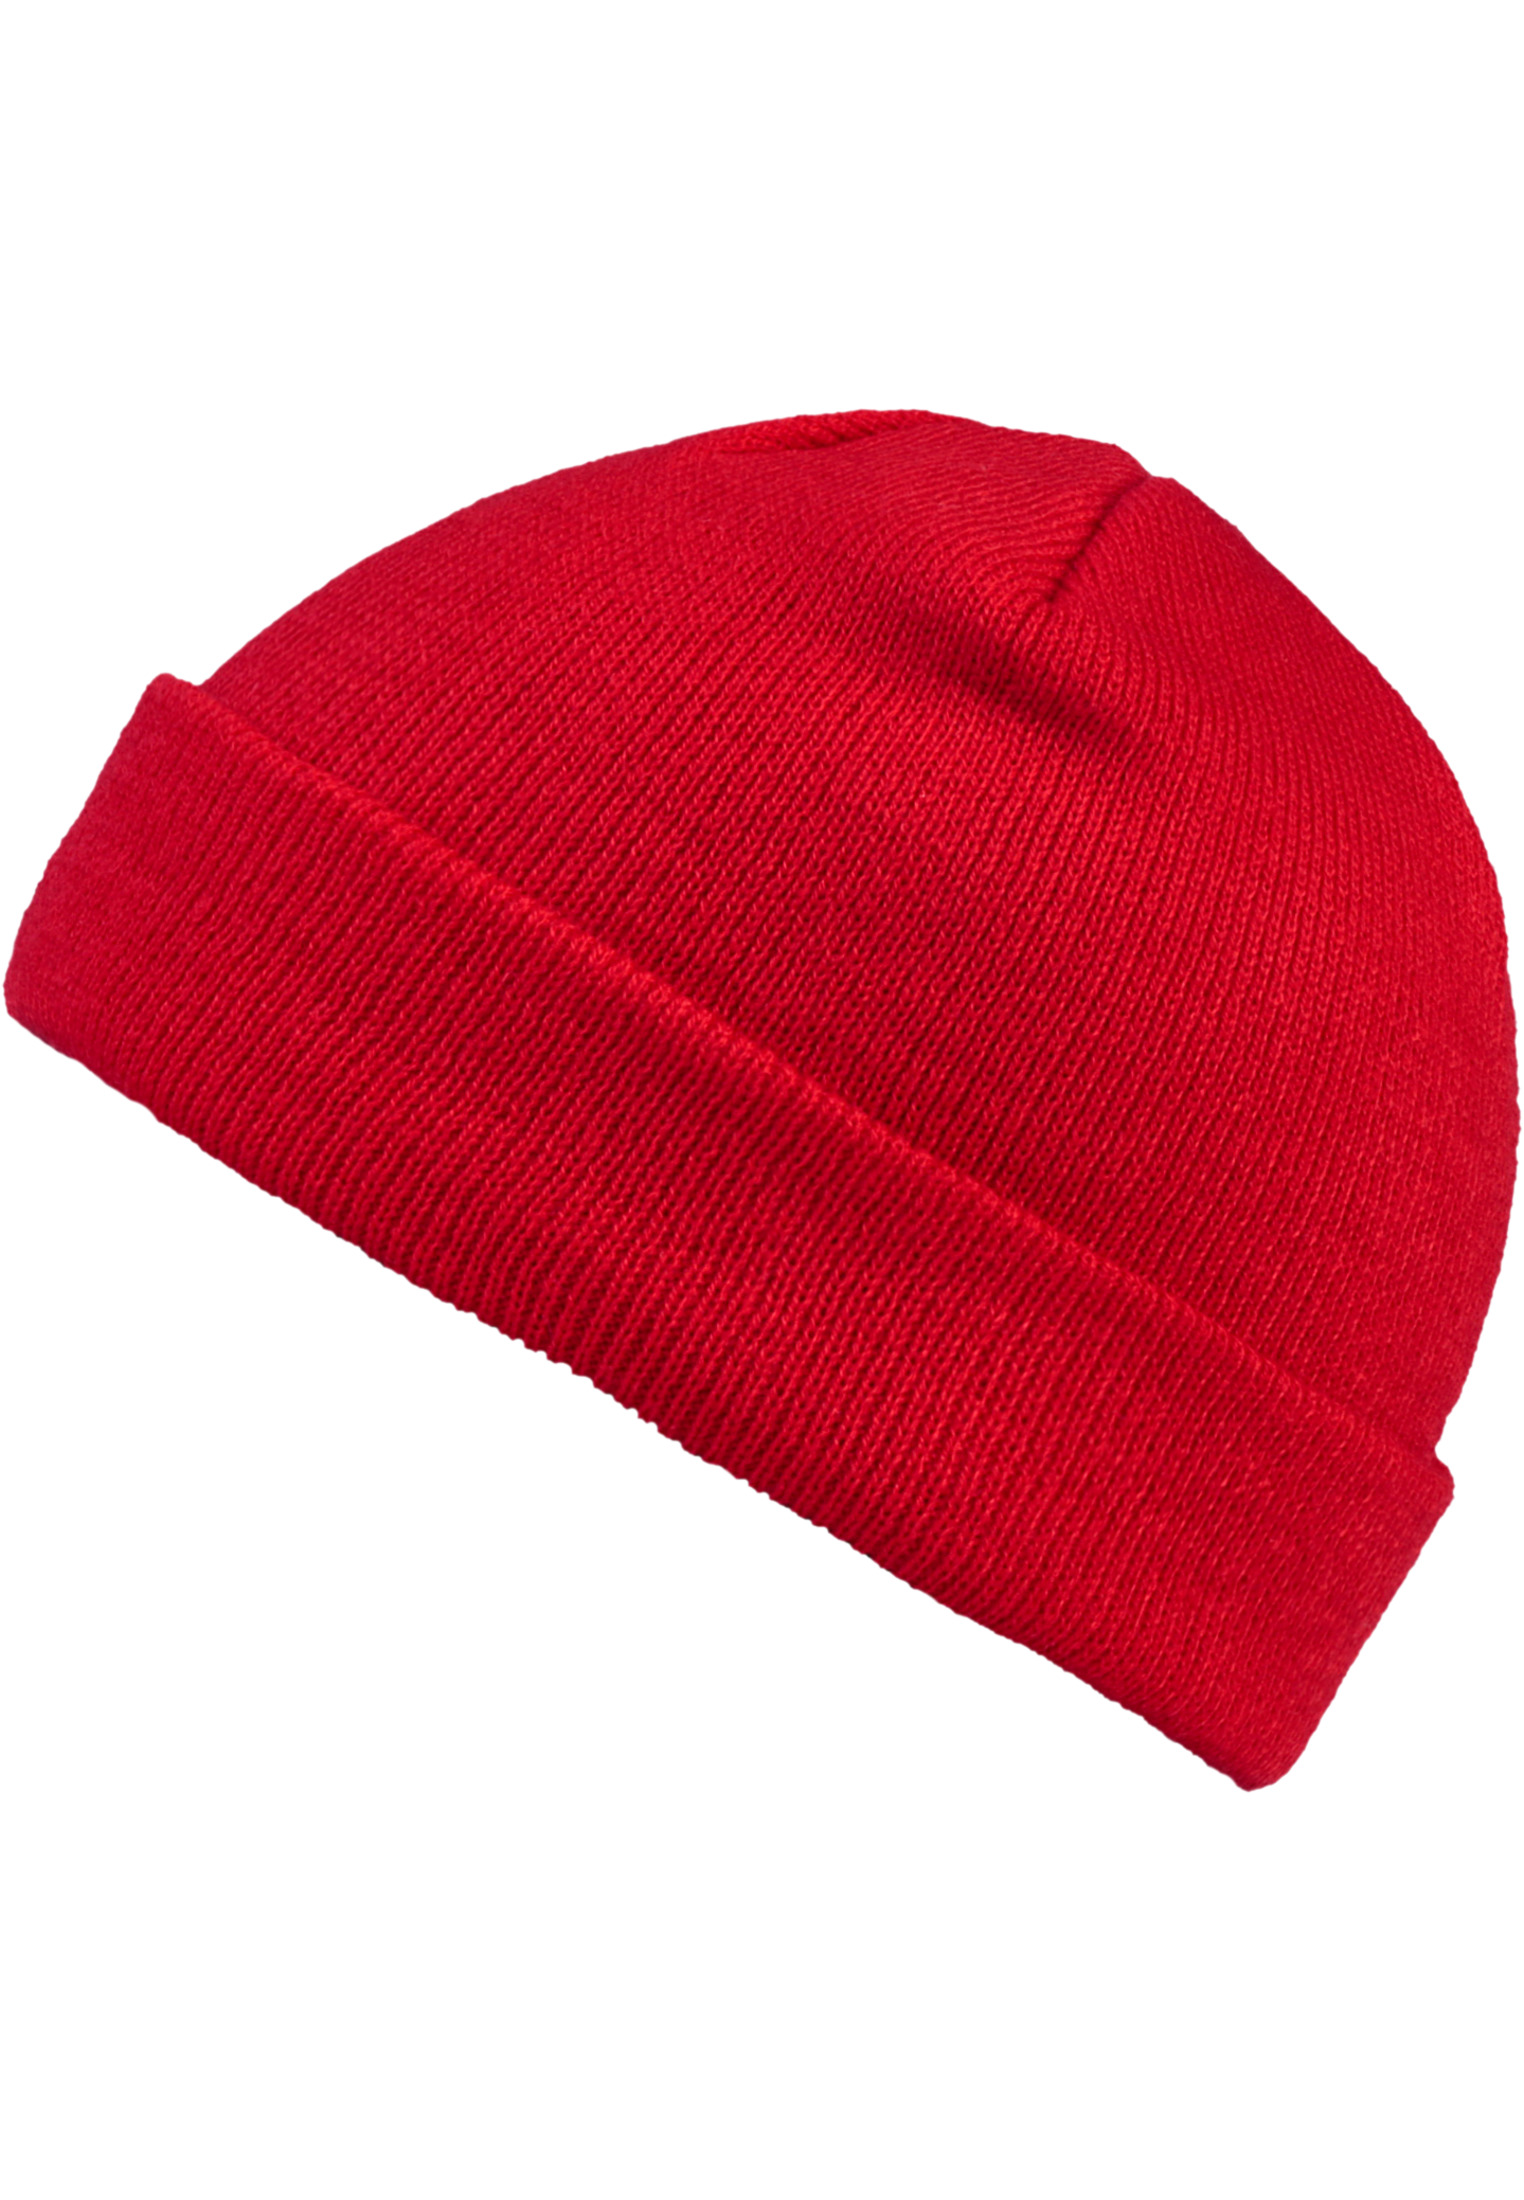 Caps & Beanies Short Cuff Knit Beanie in Farbe red